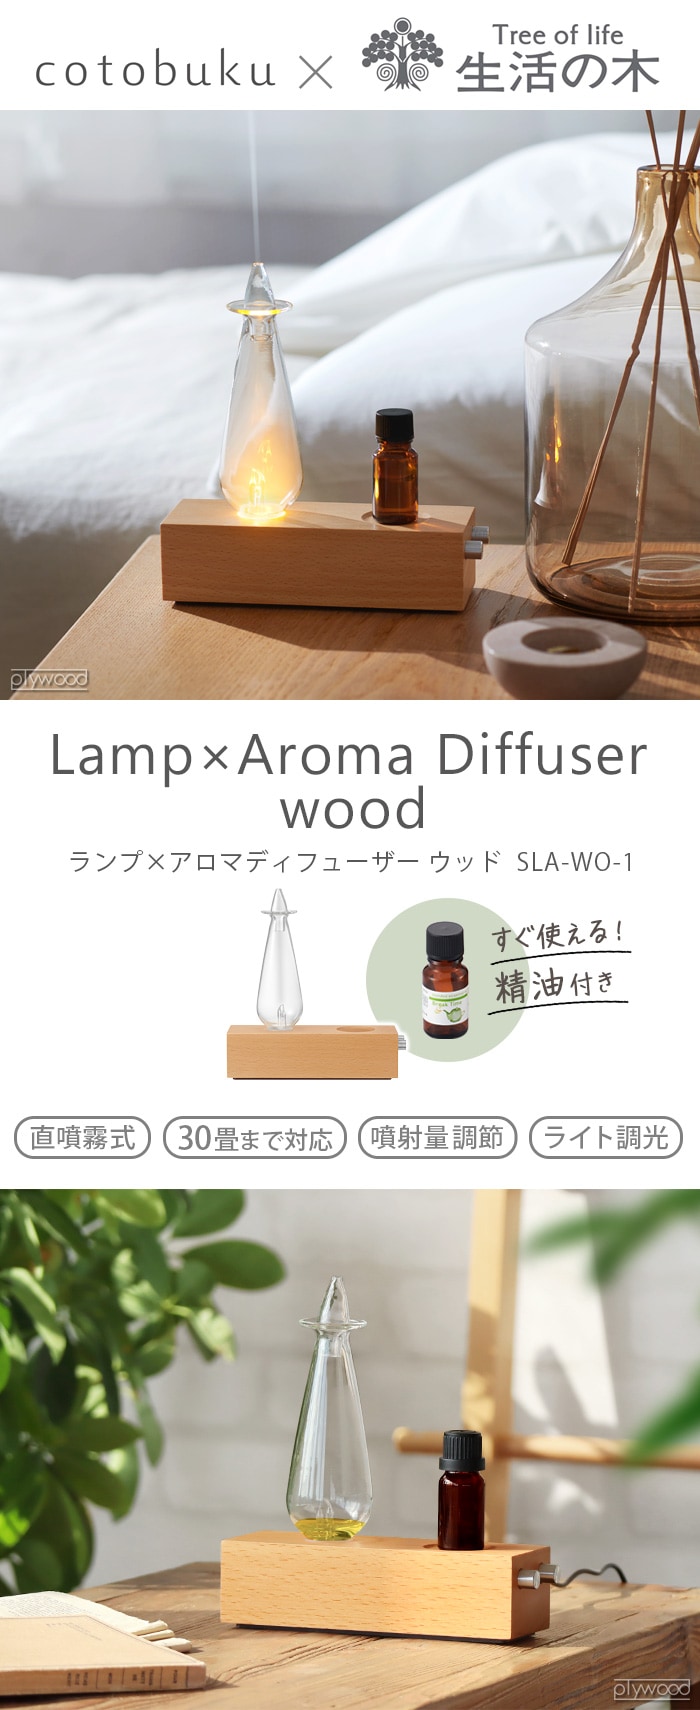 cotobuku×生活の木 Lamp×Aroma Diffuser wood [SLA-WO-1] コトブク